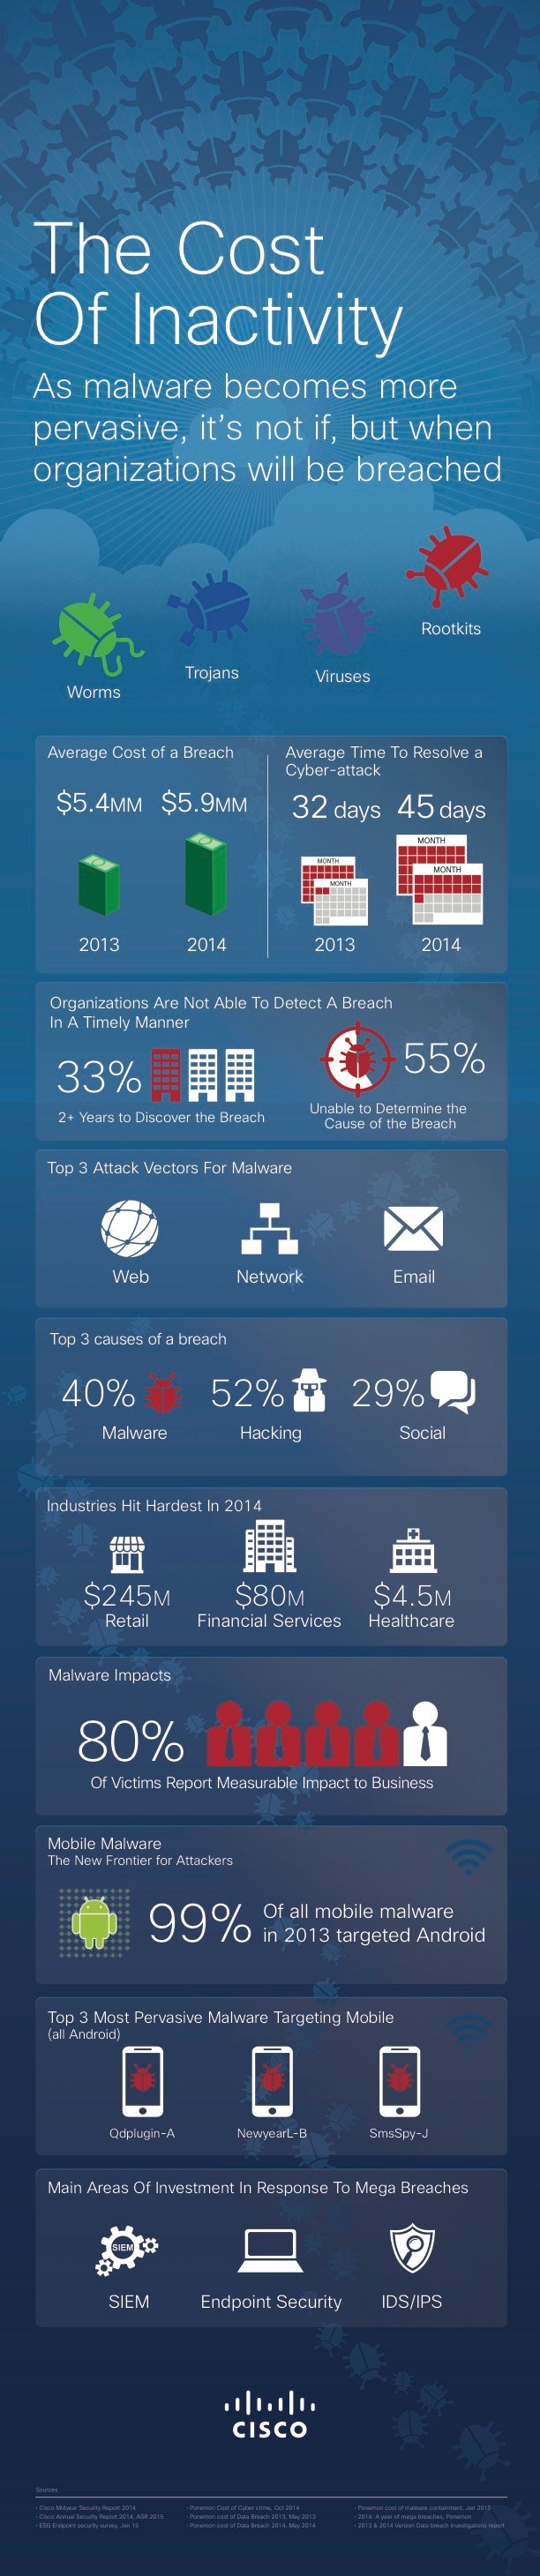 CISCO_malware-breaches-infographic.jpg